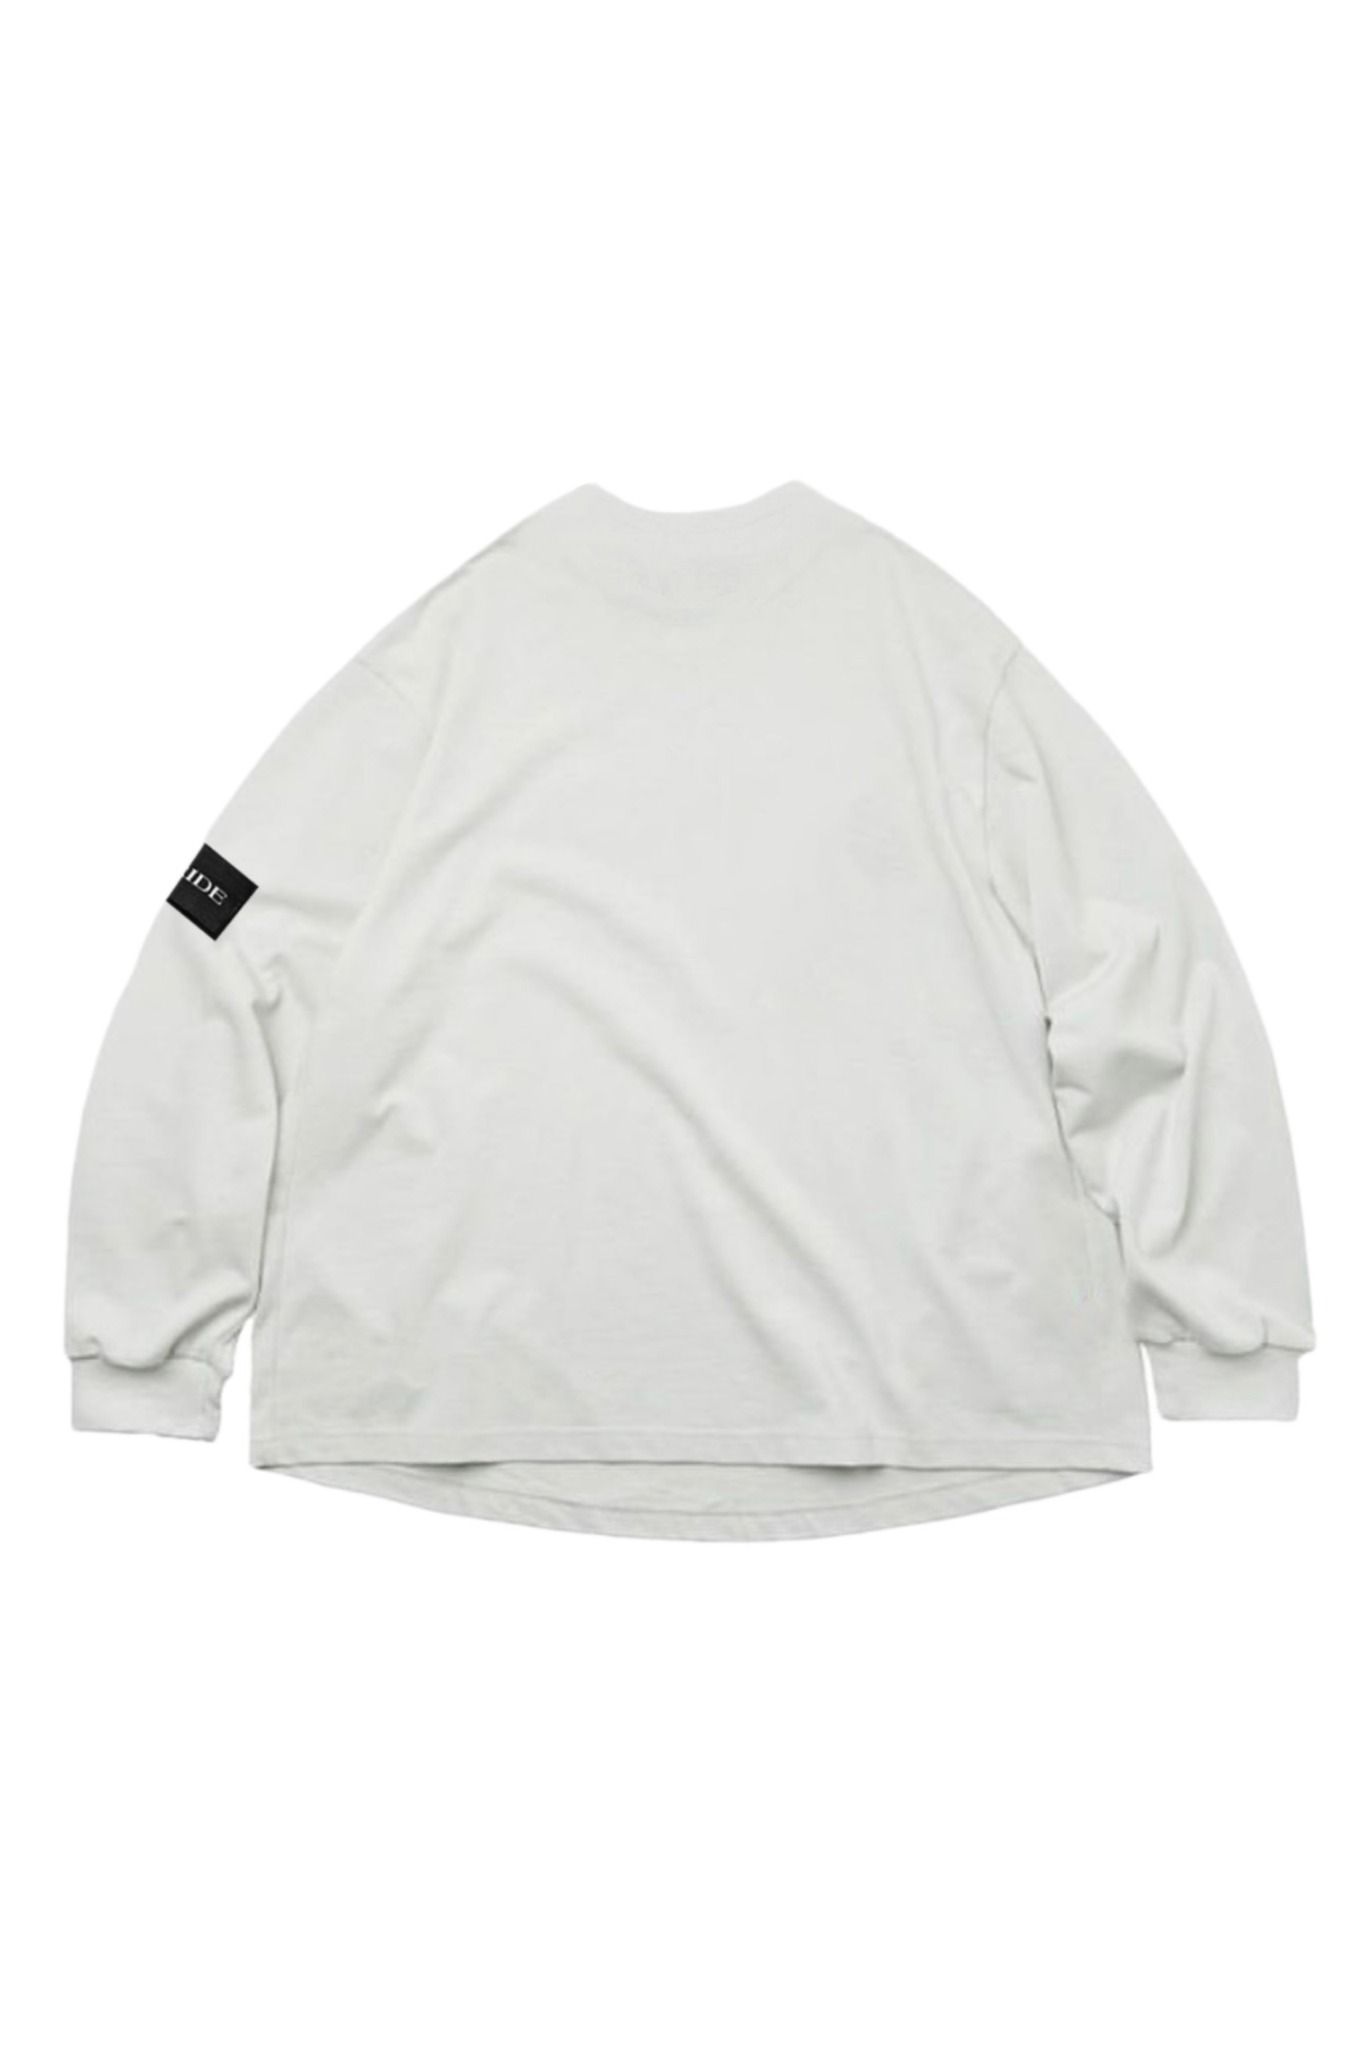  Apride Basic Sweater - White 